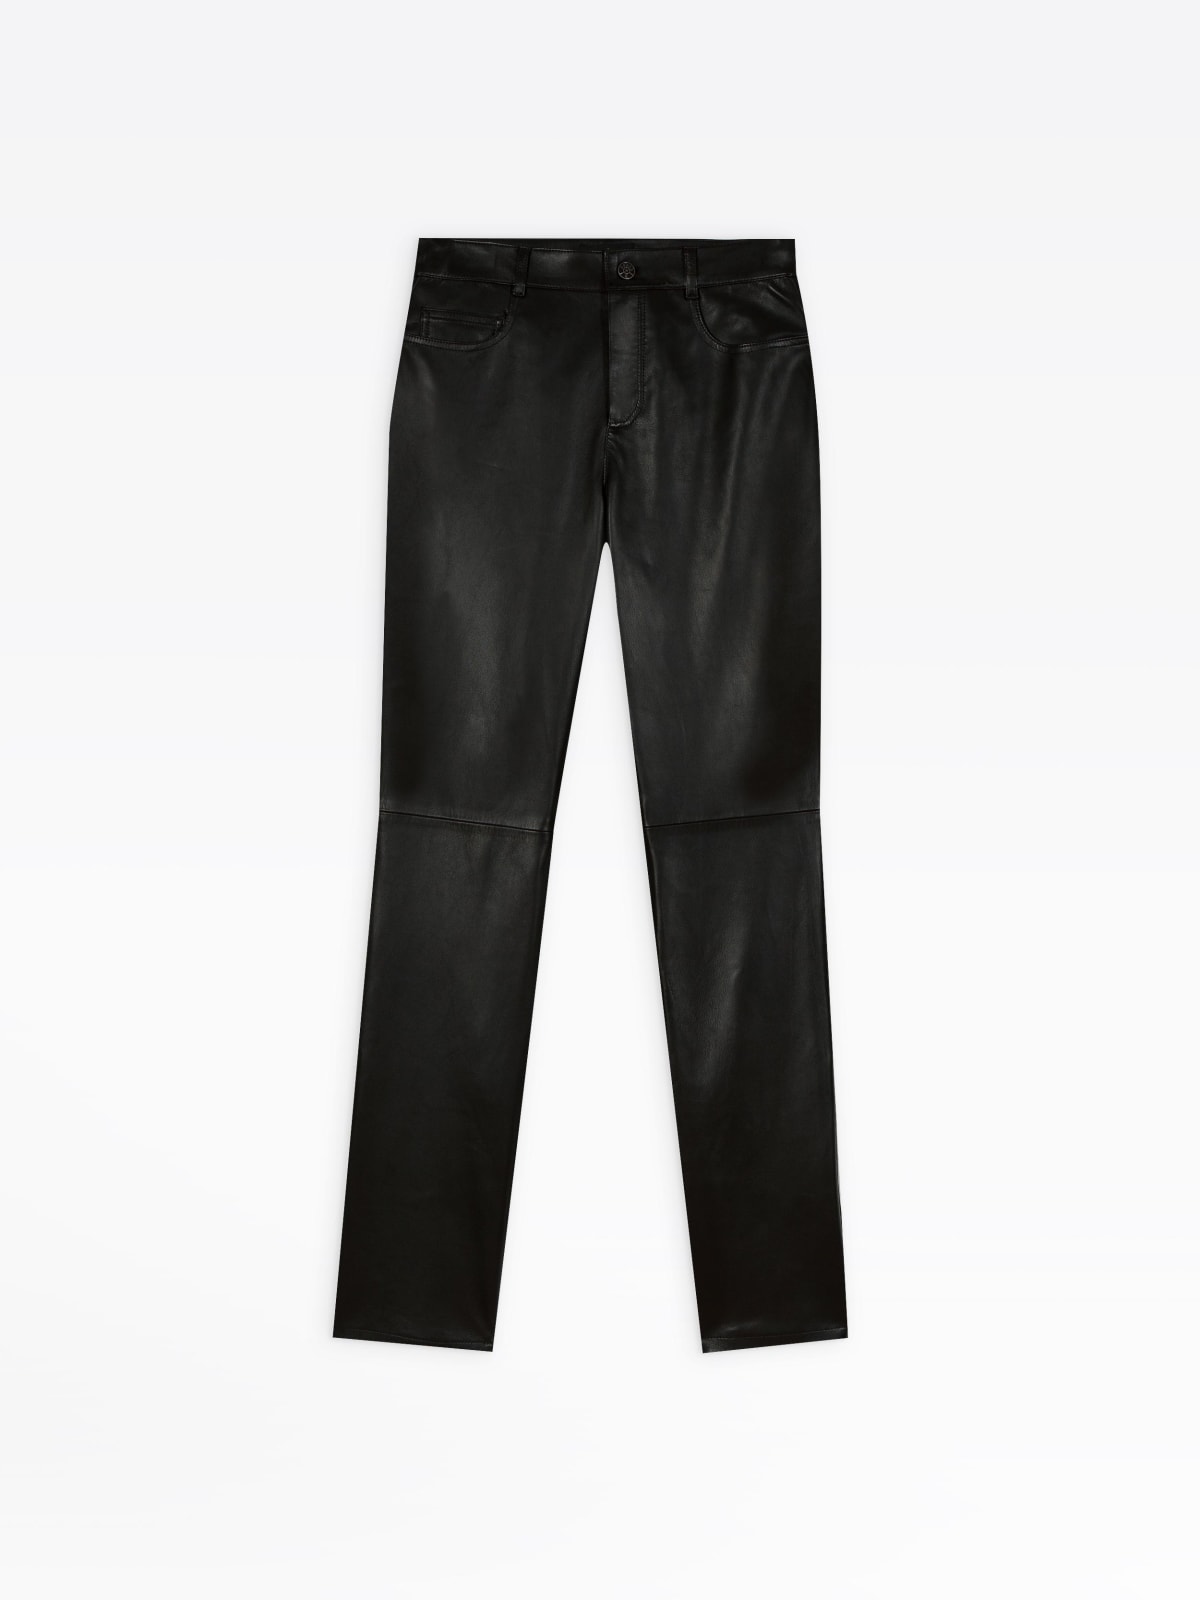 black soft leather Hina pants